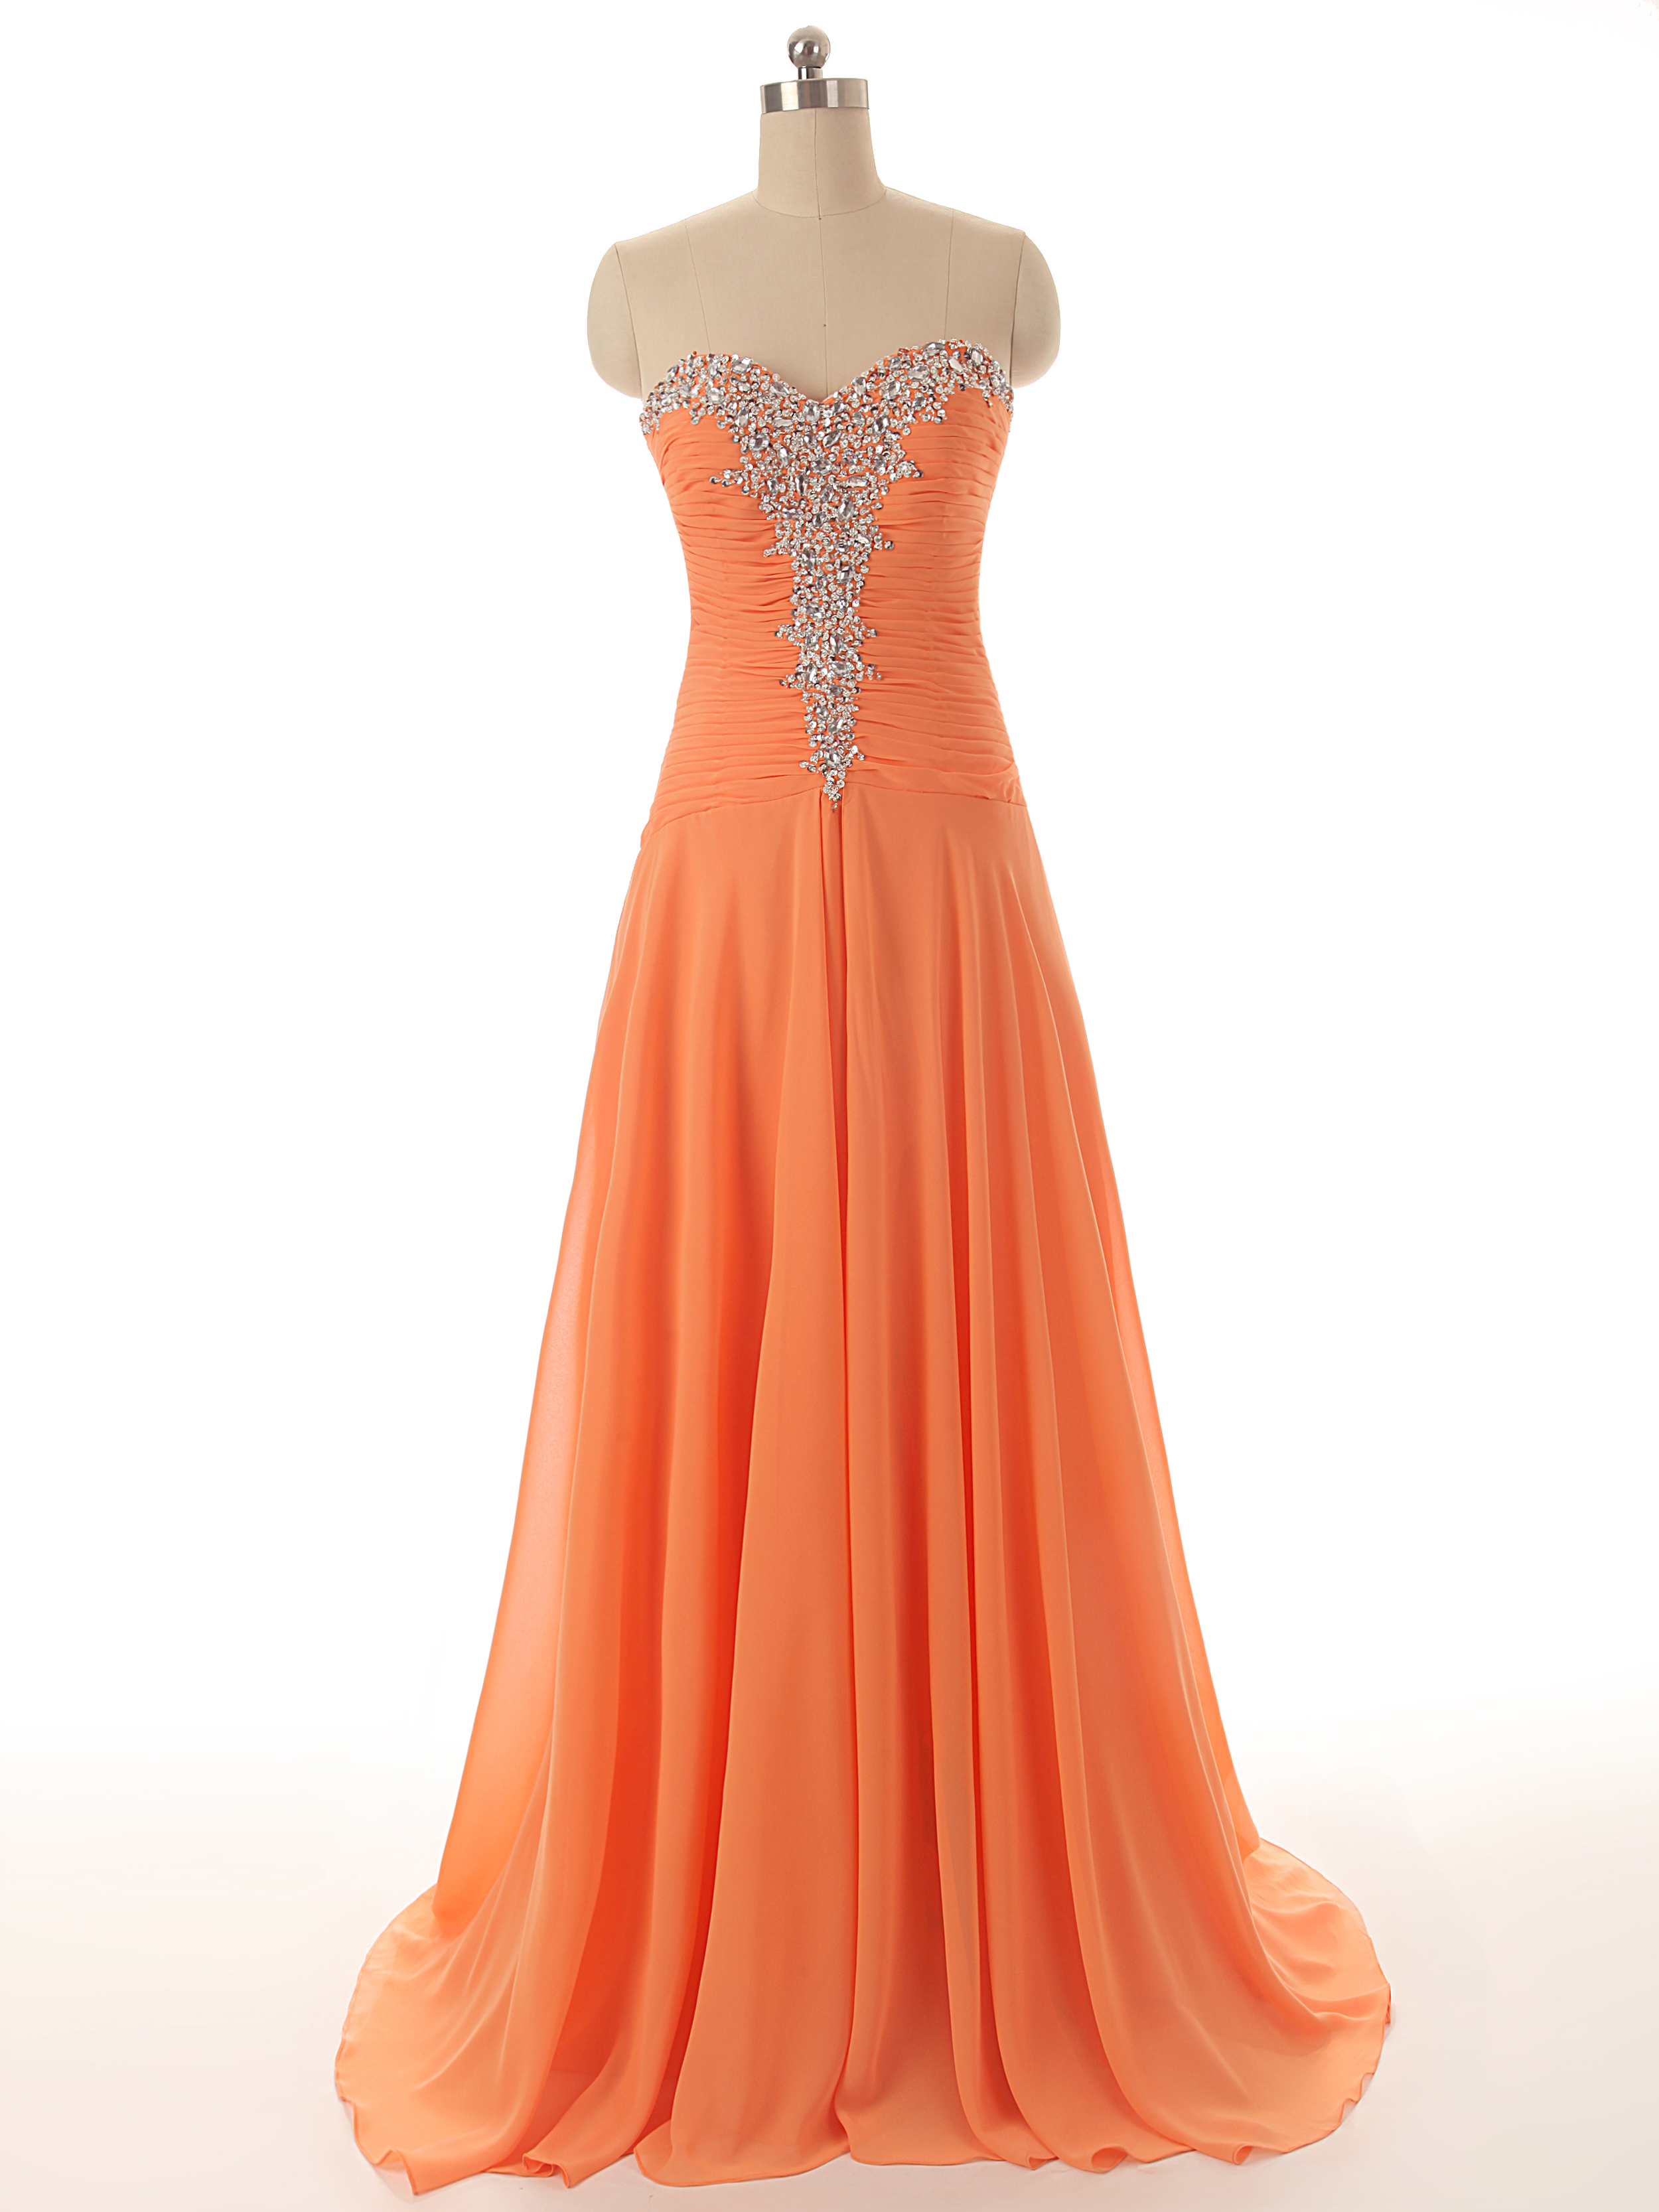 pretty orange dress